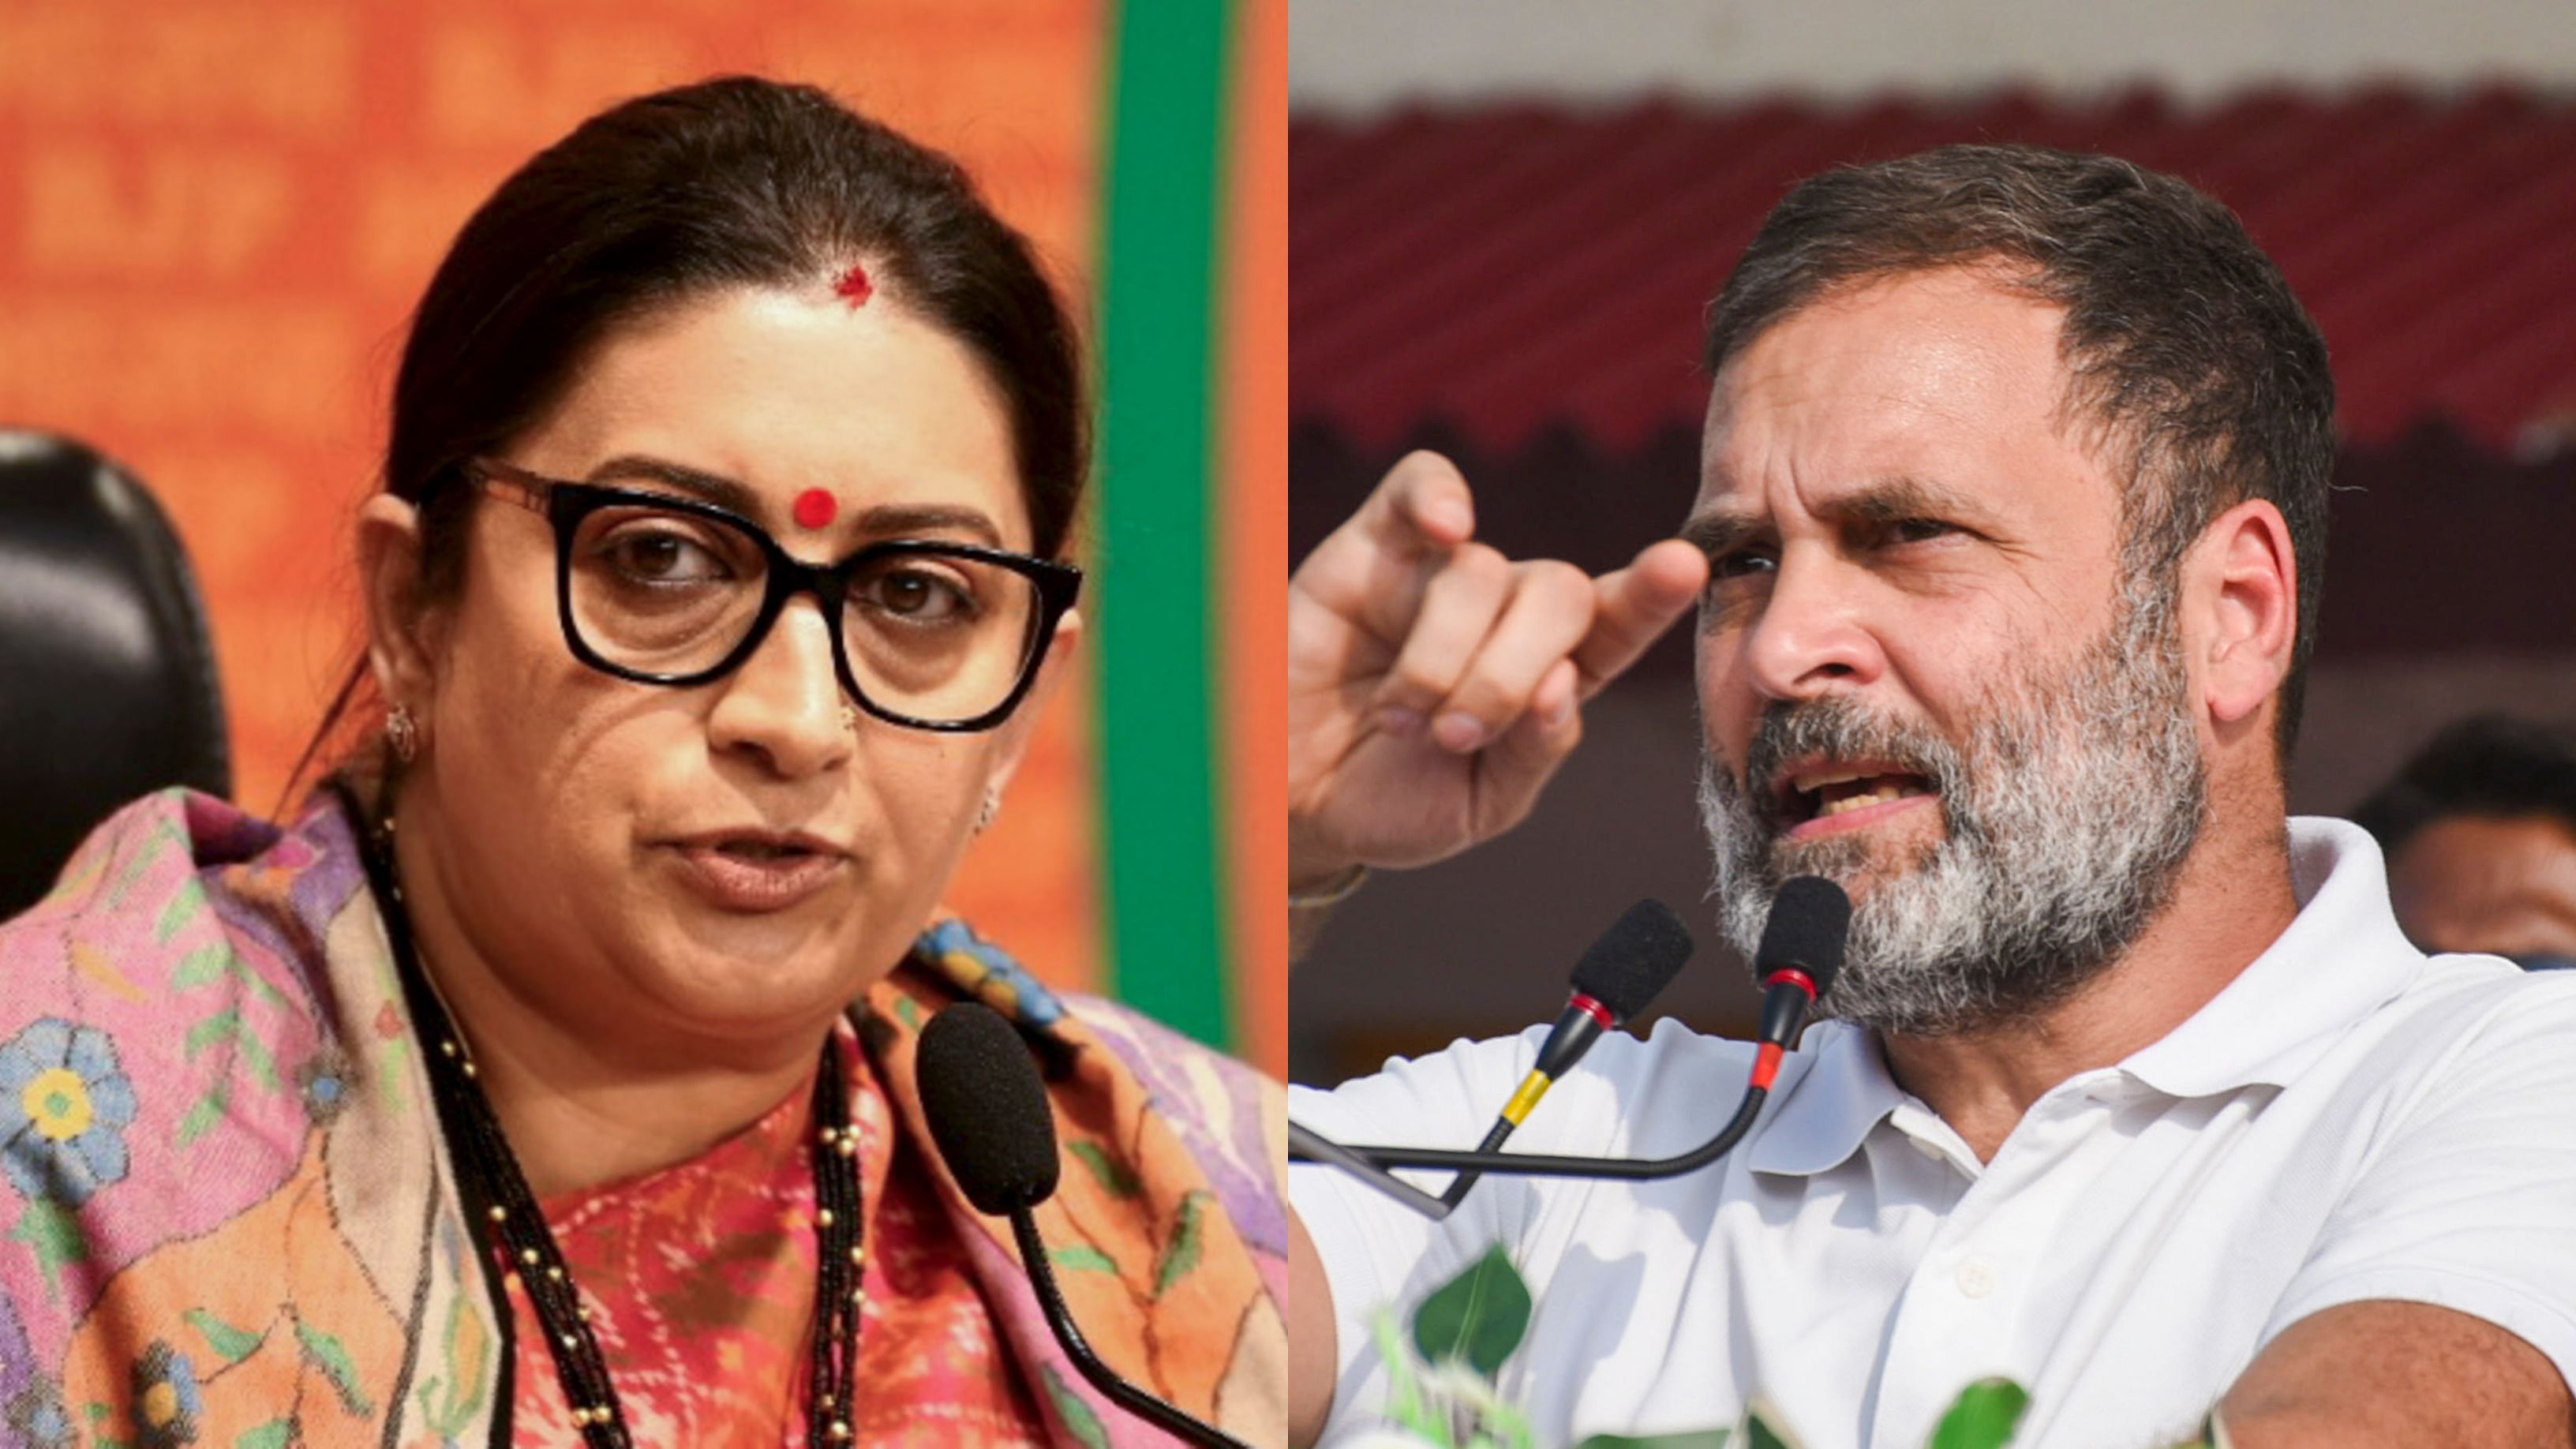 <div class="paragraphs"><p>BJP leader Smriti Irani (L) and Congress leader Rahul Gandhi (R).</p></div>